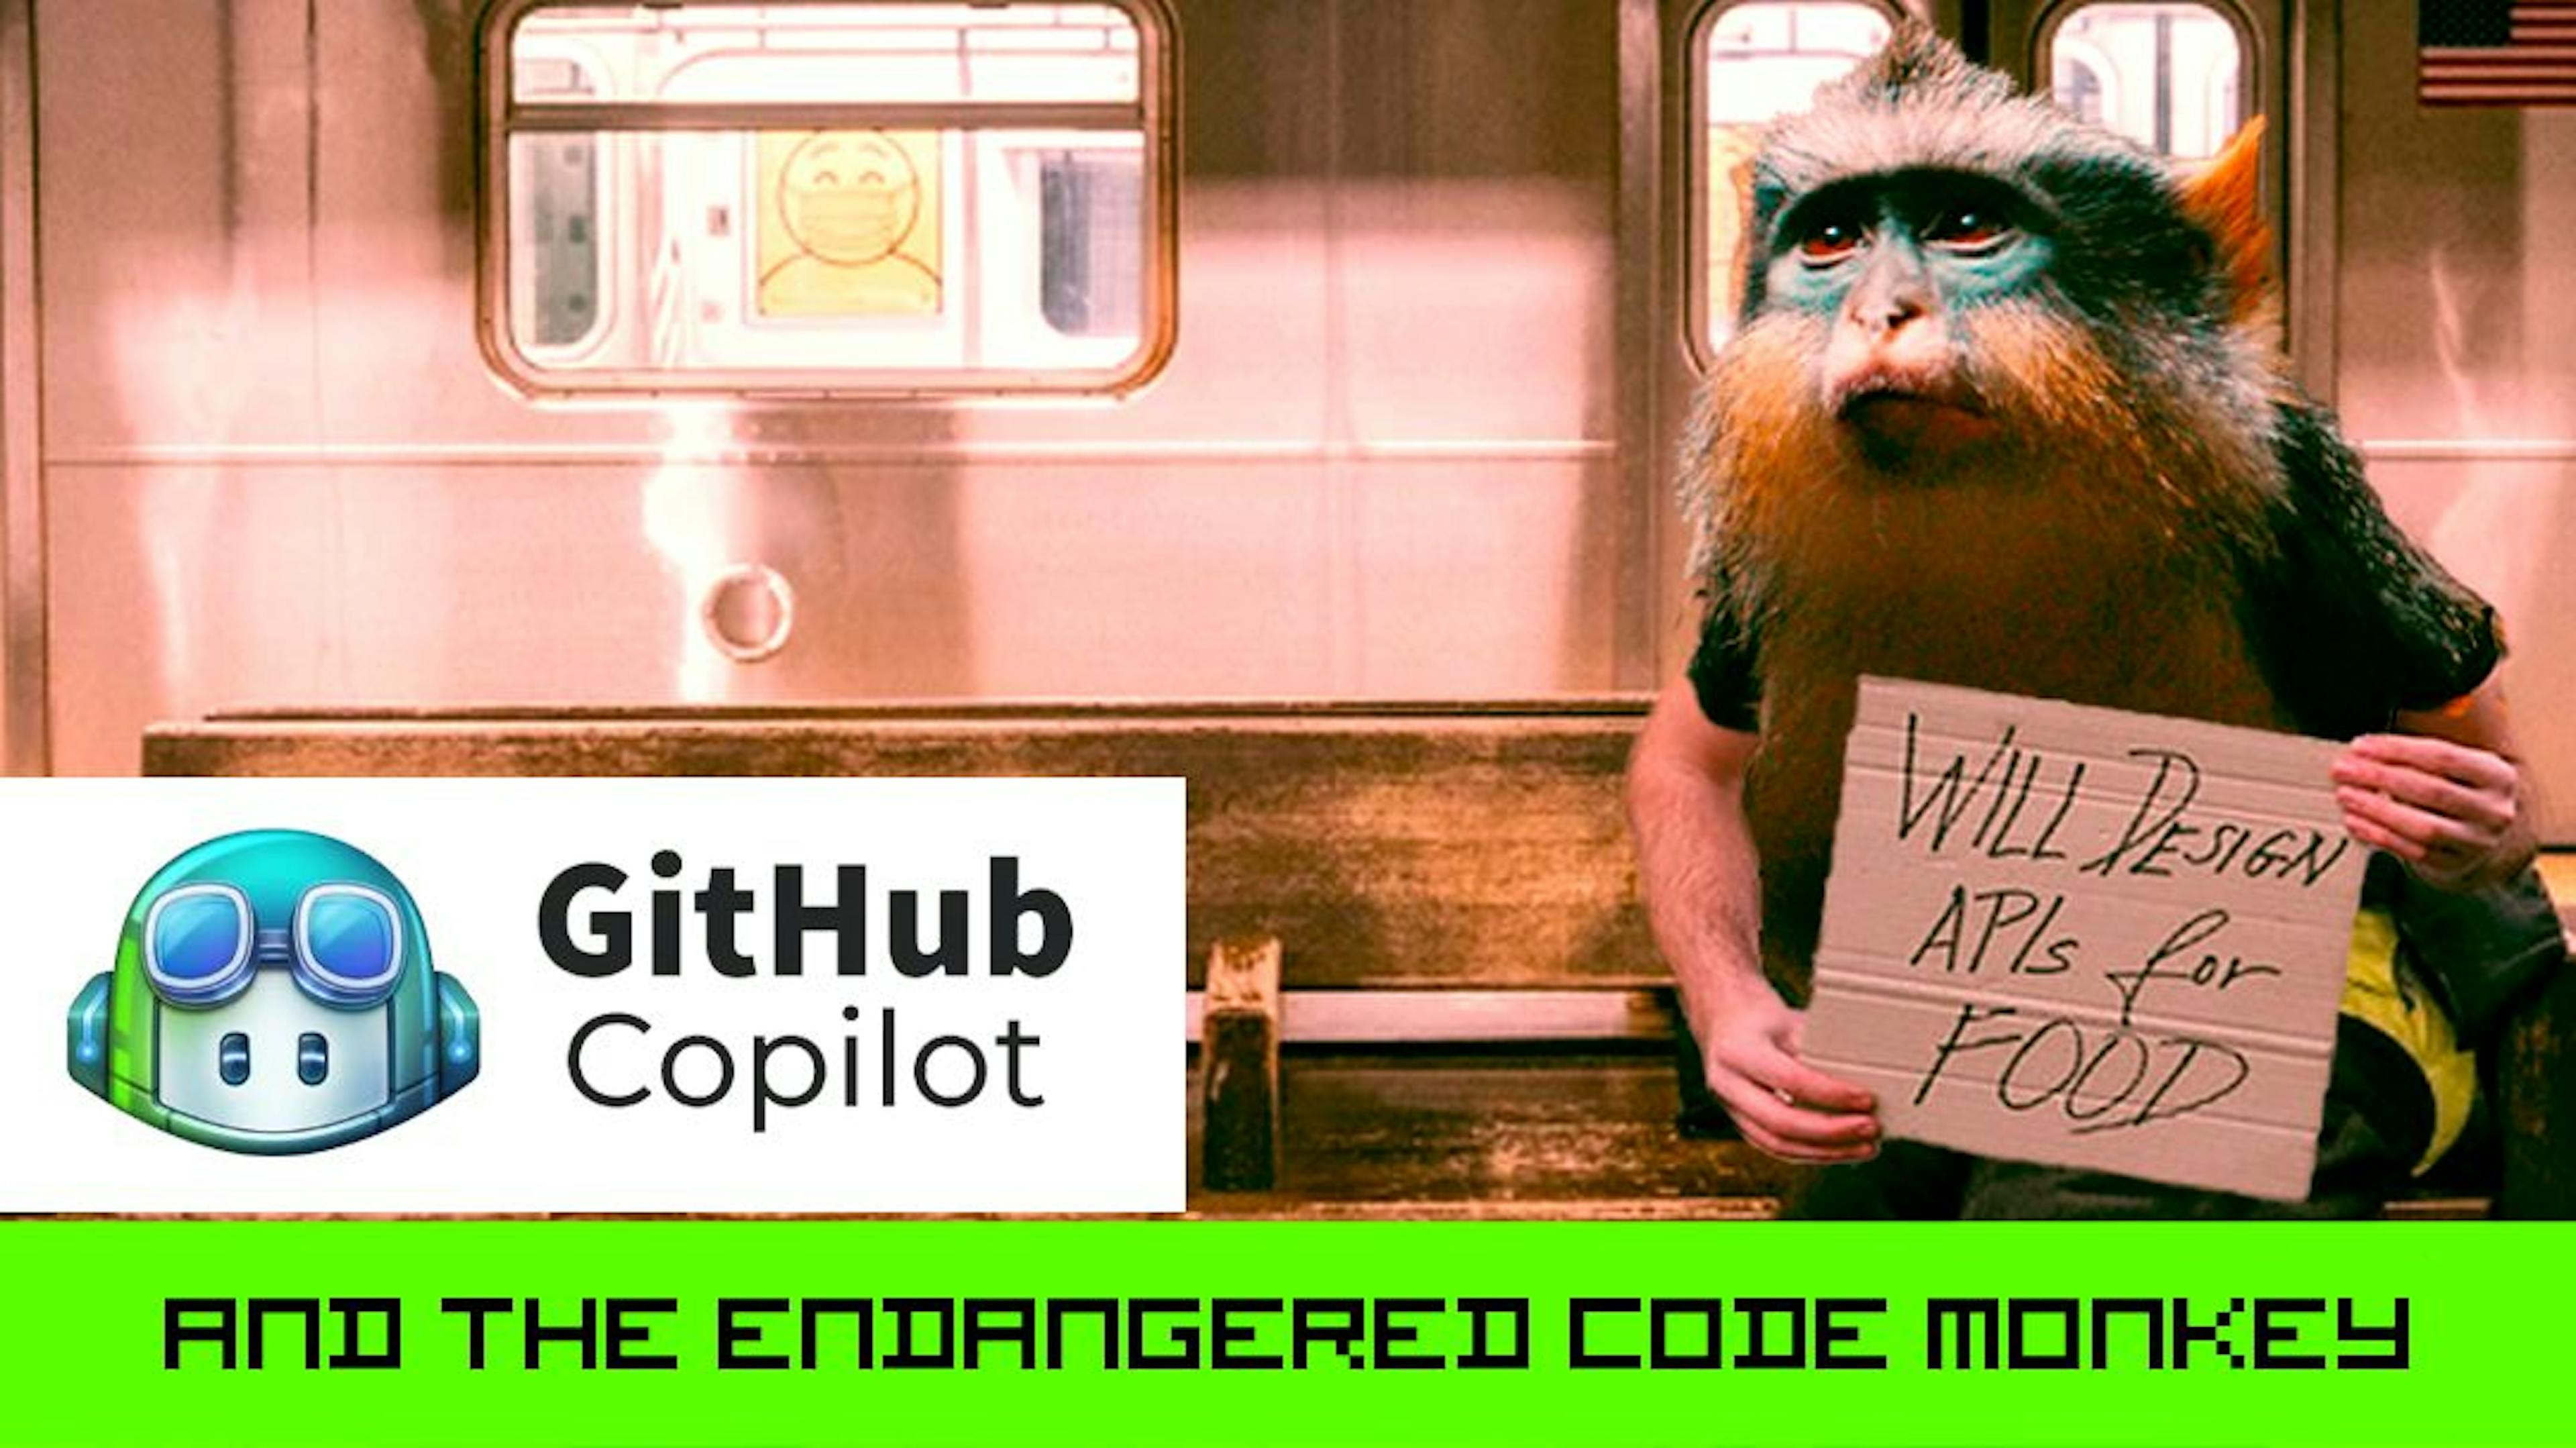 featured image - Copiloto do GitHub e o Code Monkey ameaçado